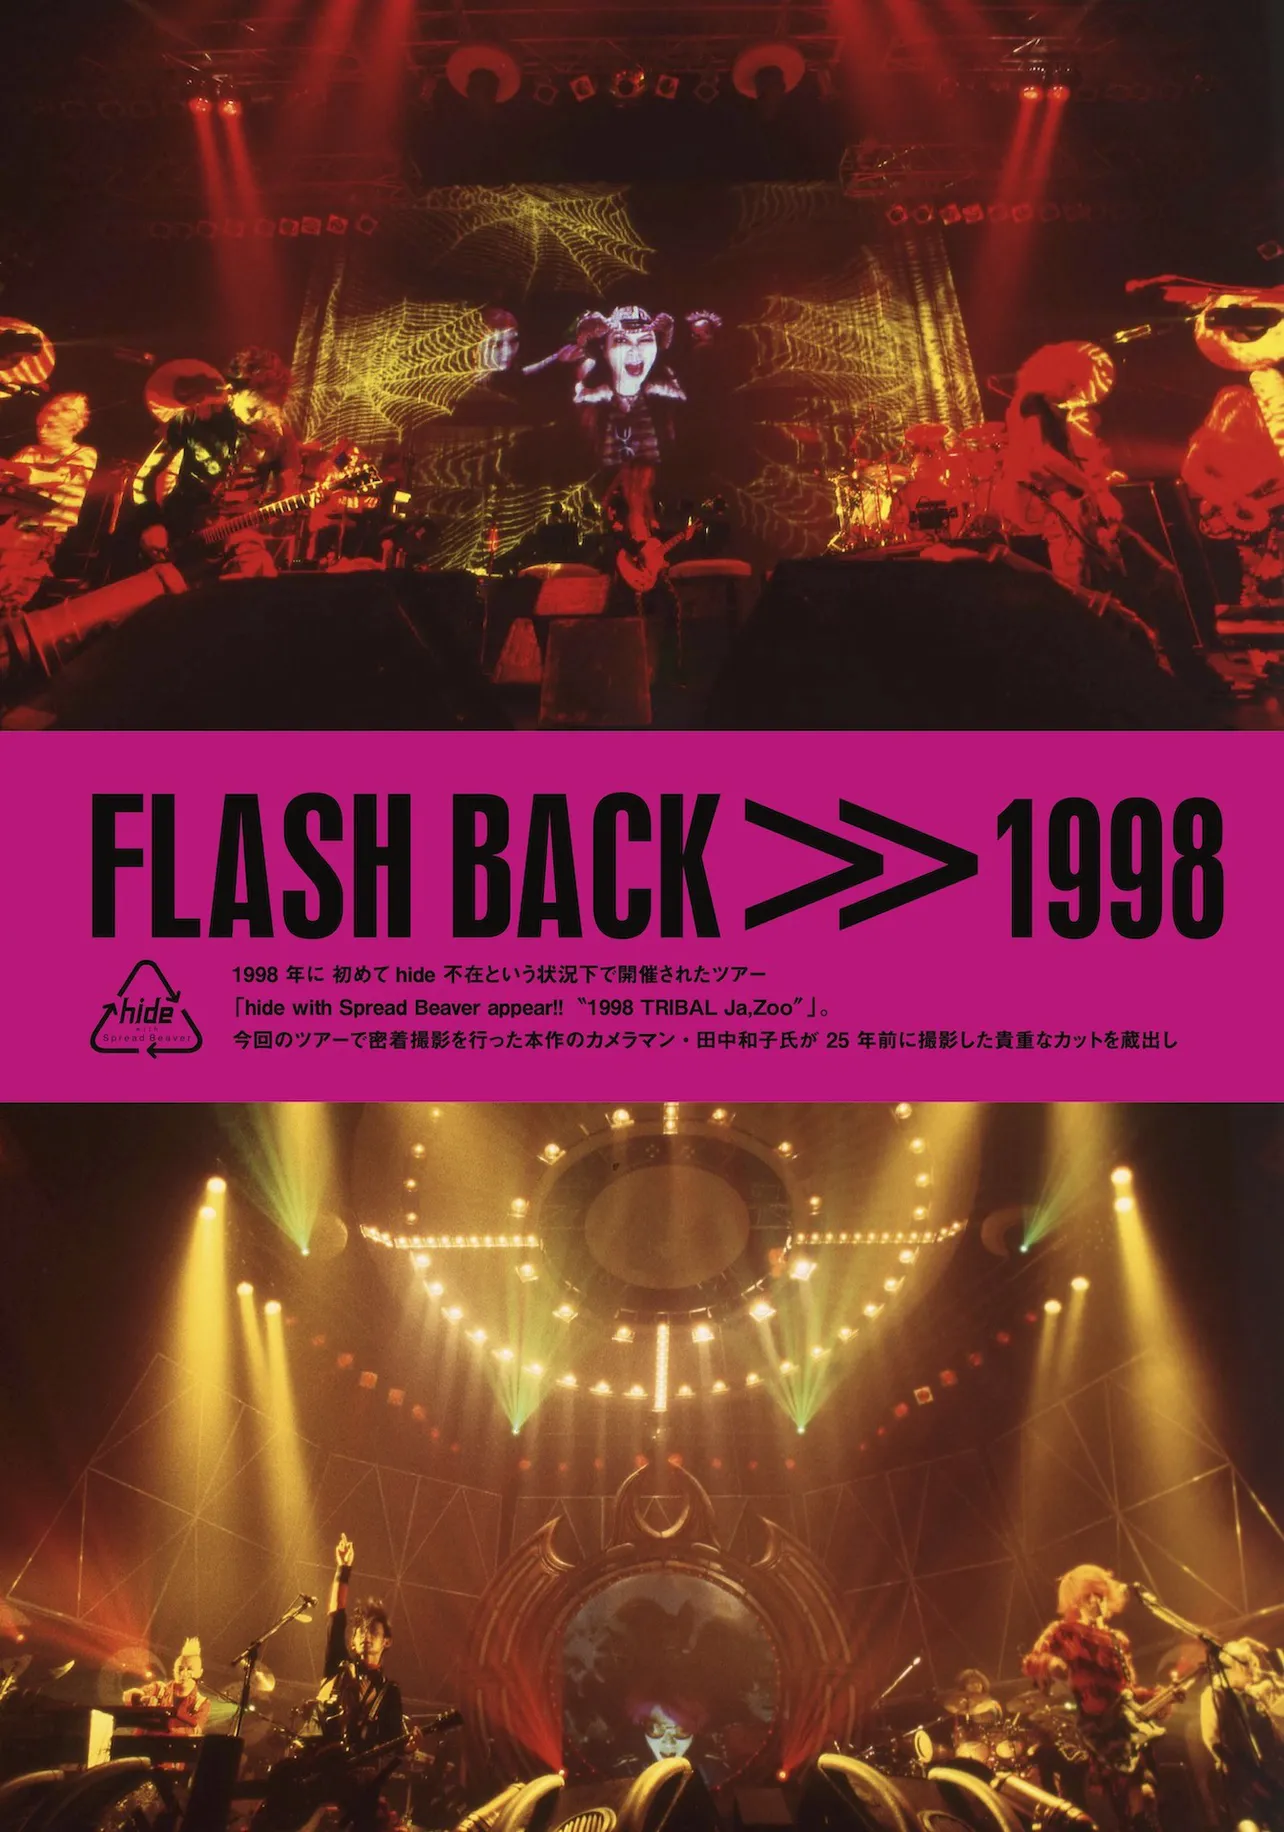 FLASH BACK >>1998